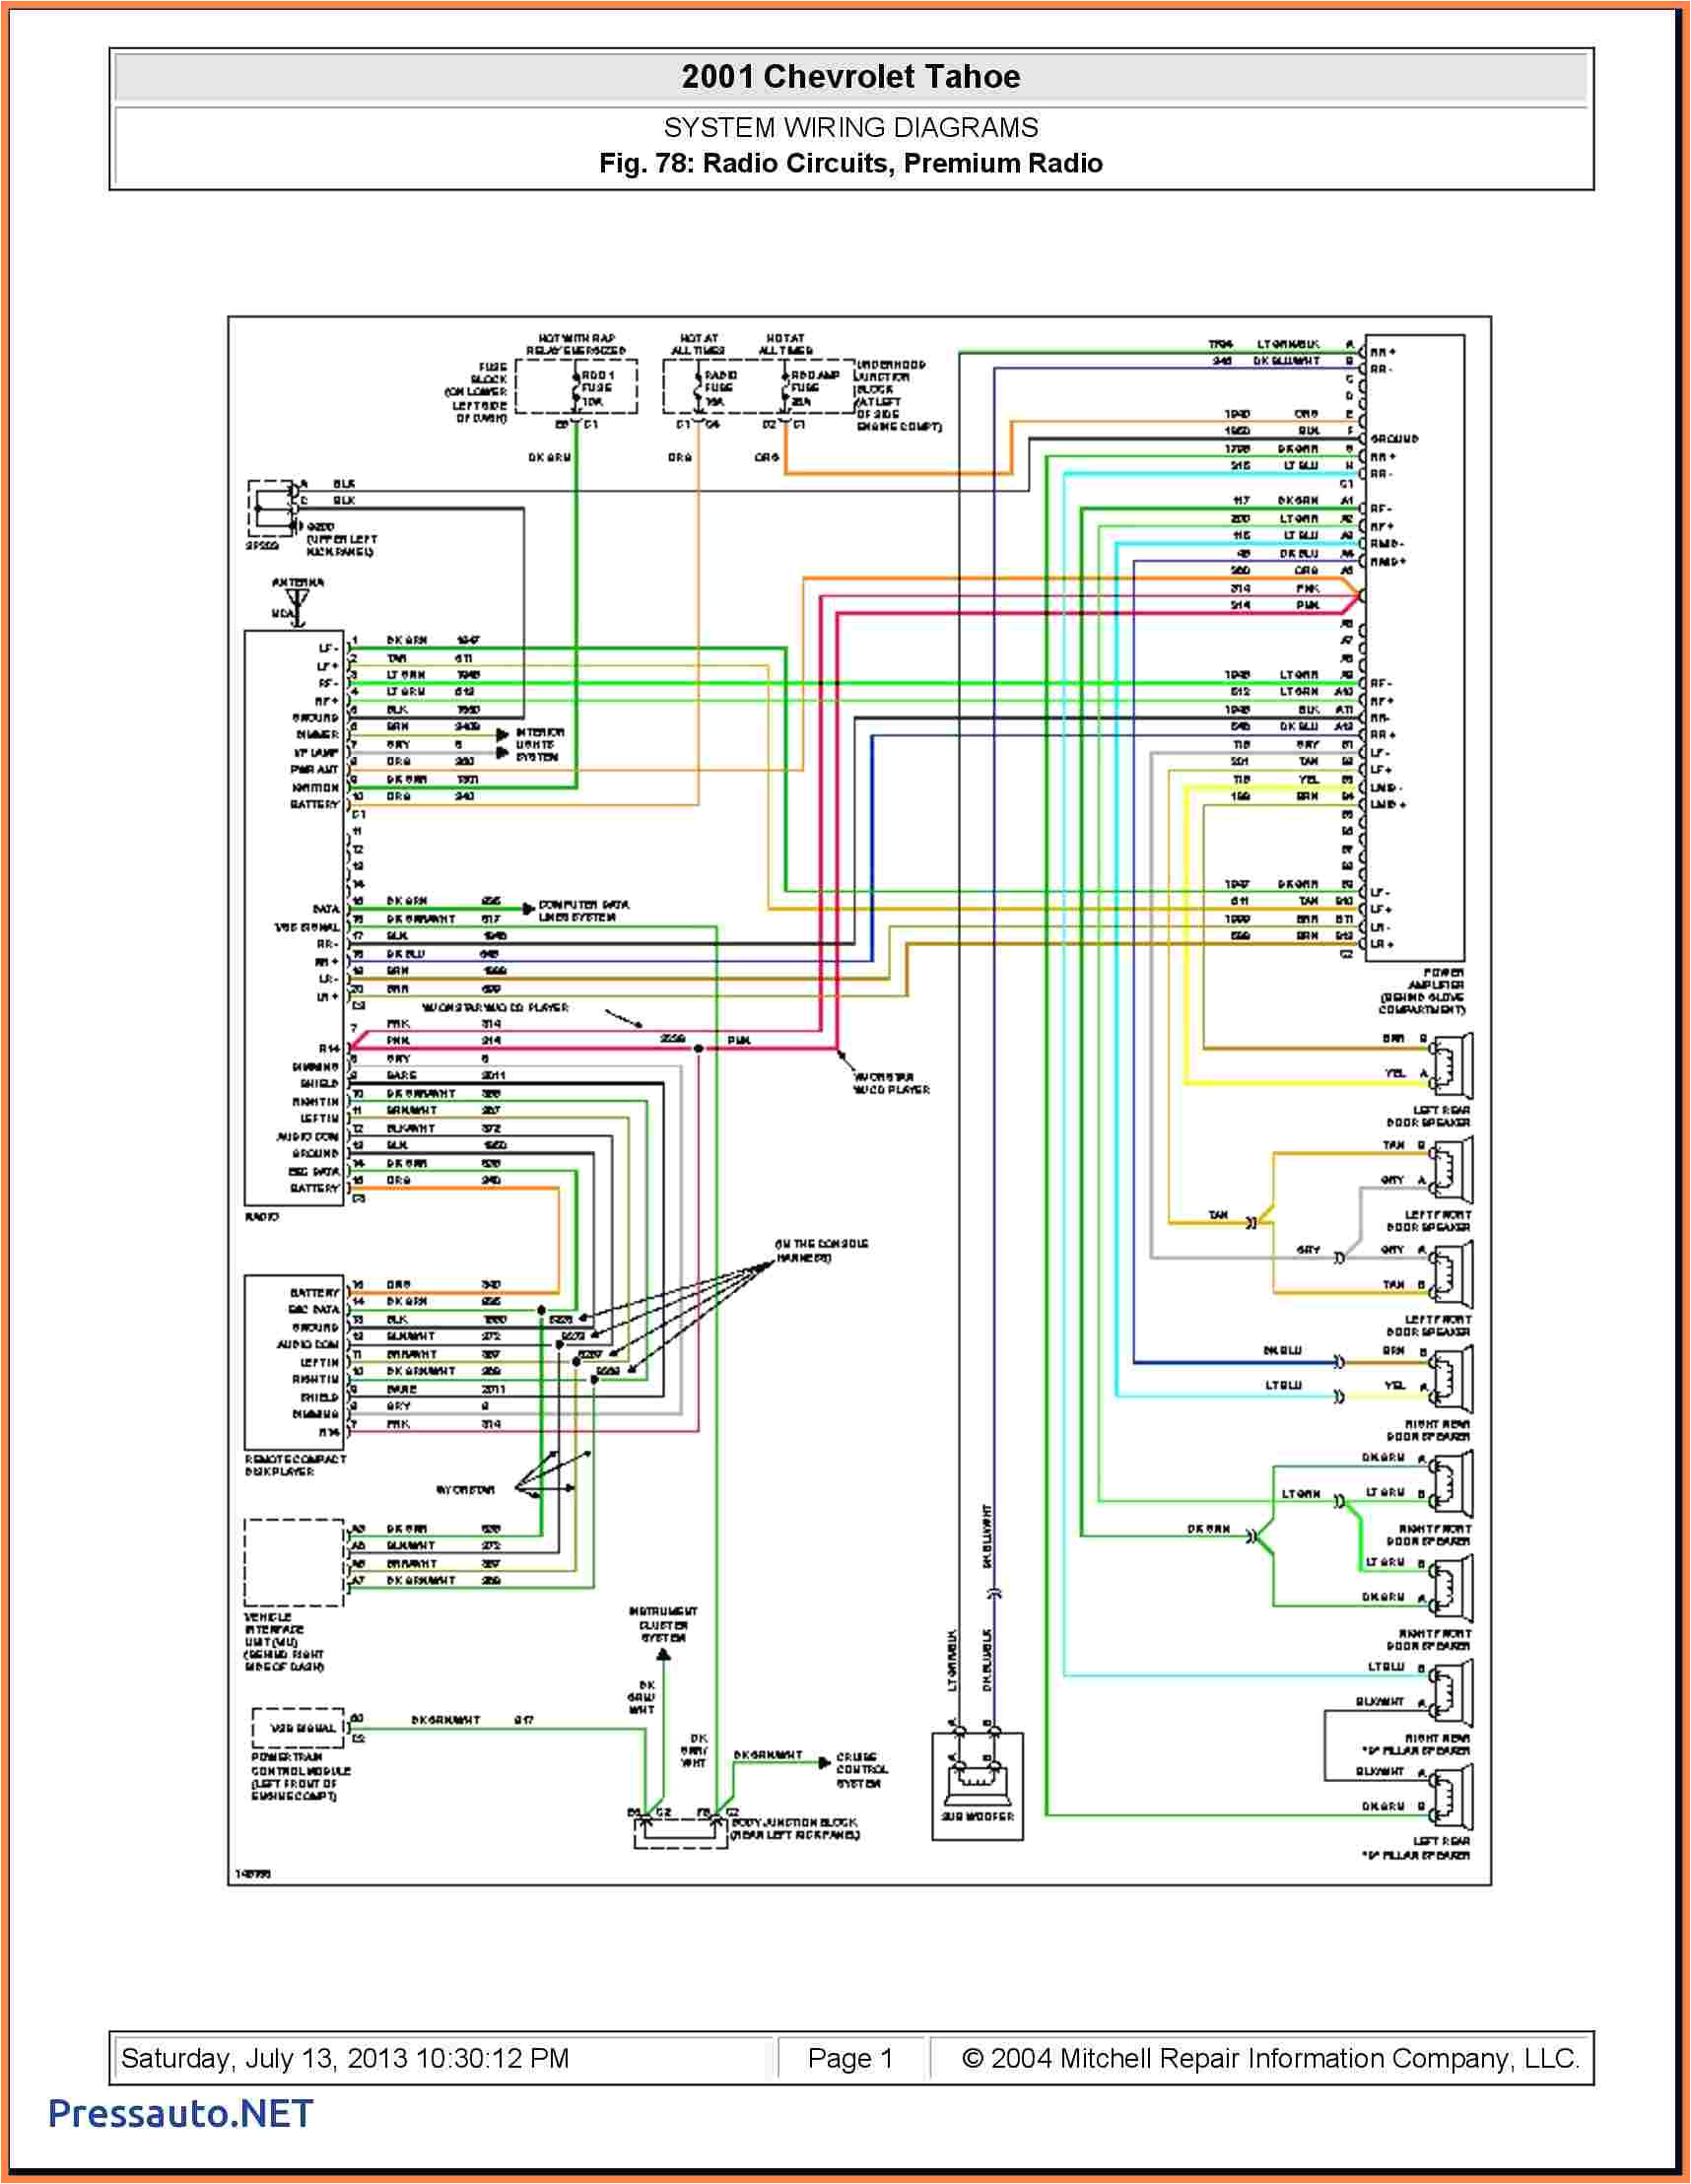 2007 saturn aura radio wiring diagram simple 2002 chevrolet trailblazer wiring harness wiring diagram center e280a2 of 2007 saturn aura radio wiring diagram jpg